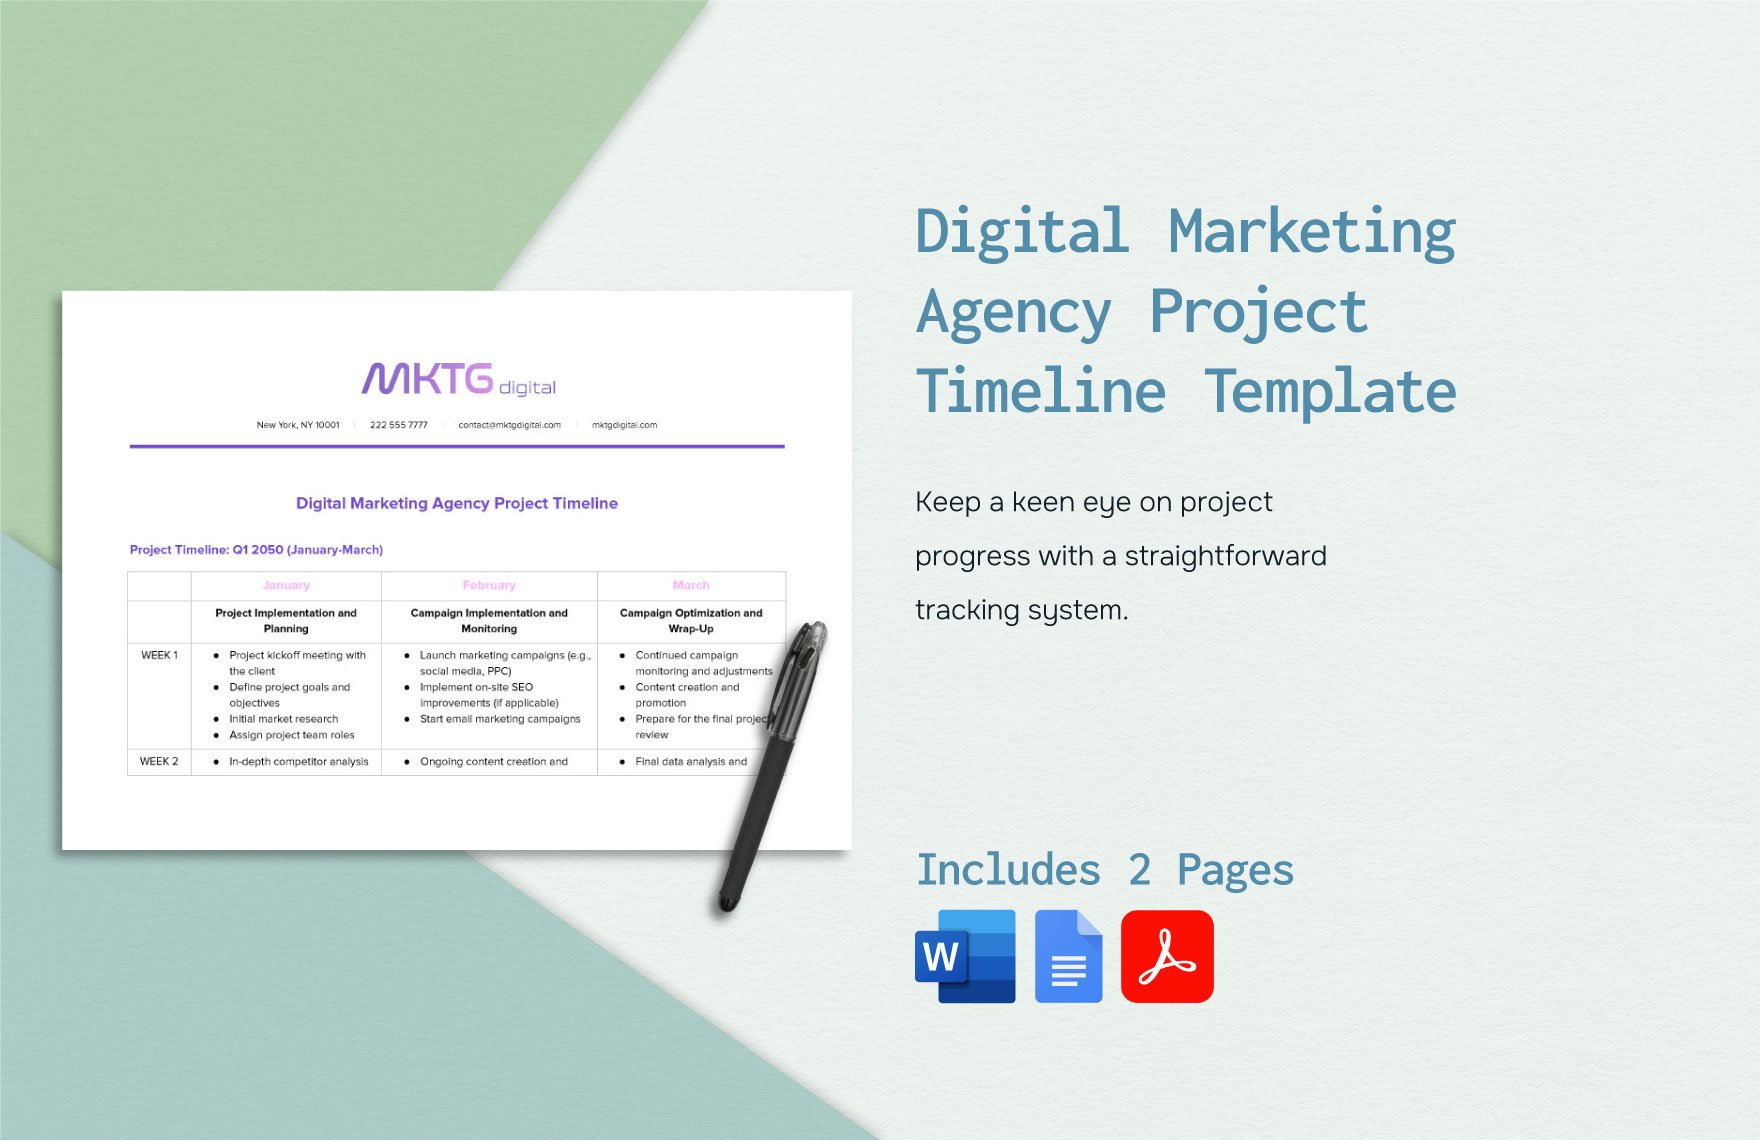 Digital Marketing Agency Project Timeline Template